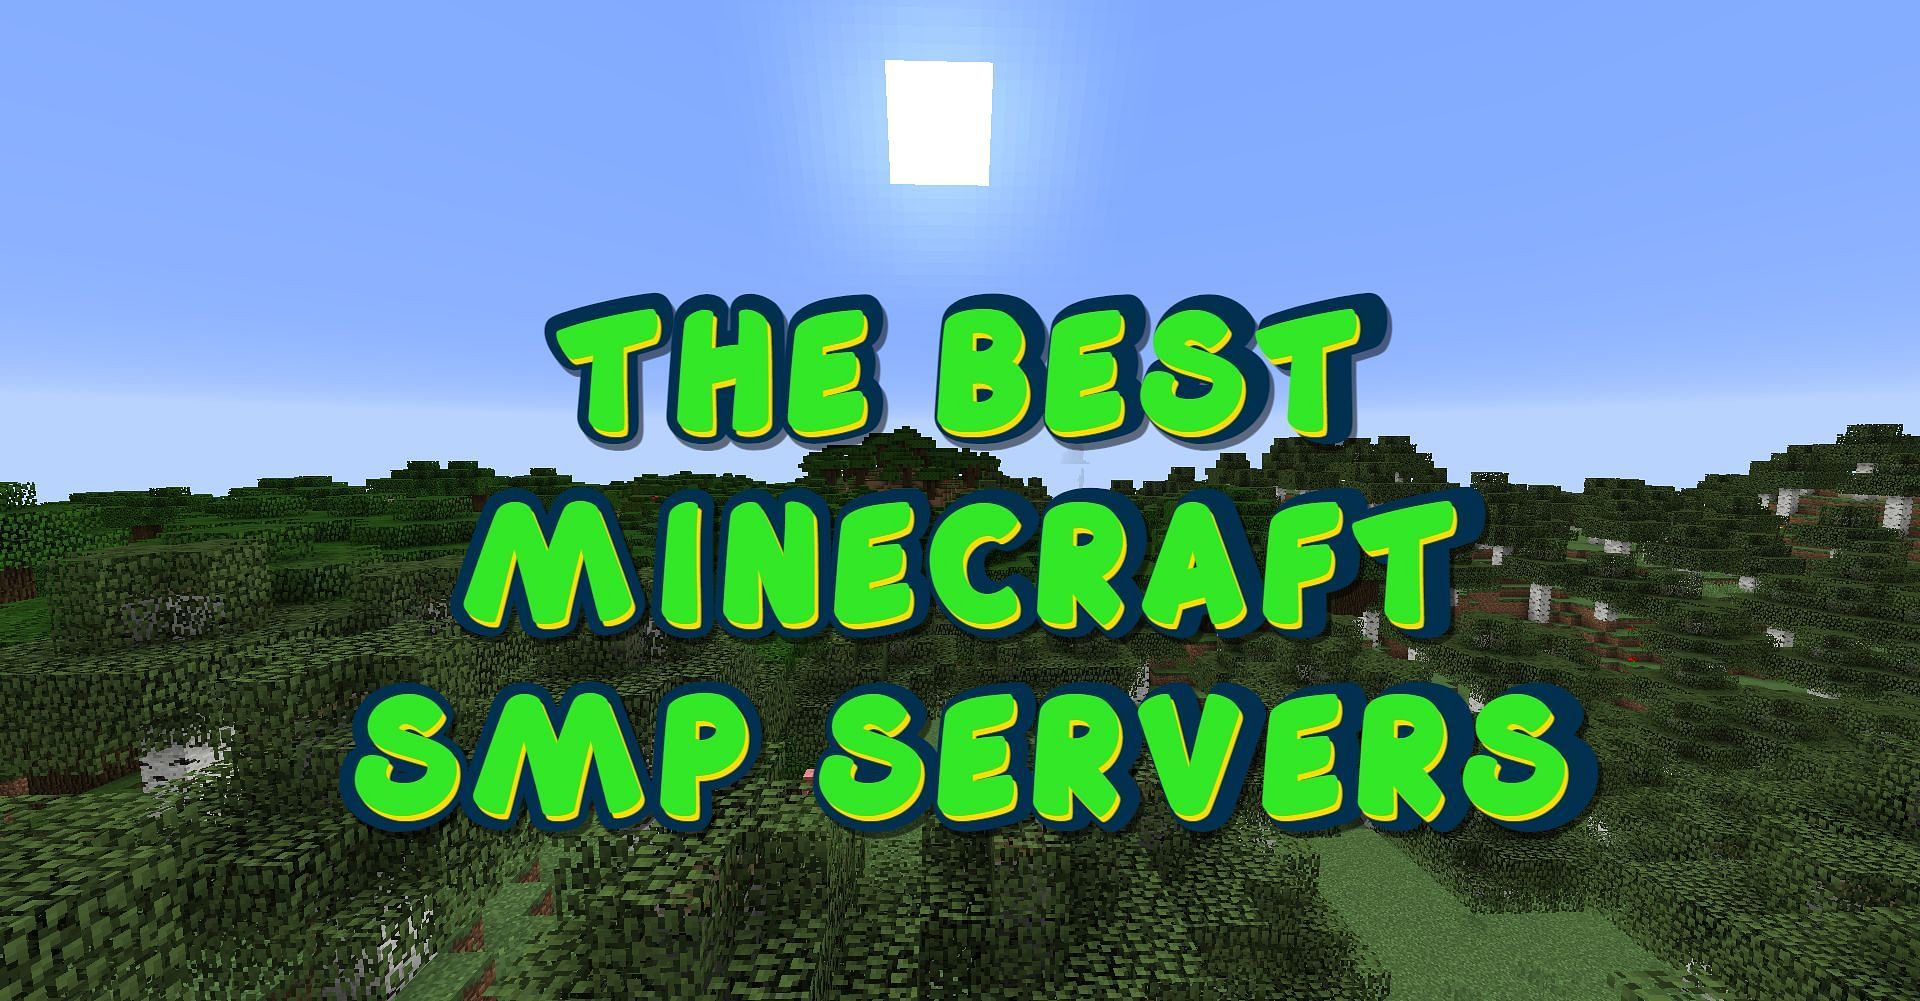 Minecraft SMP Servers make survival mode much more fun (Image via Sportskeeda)